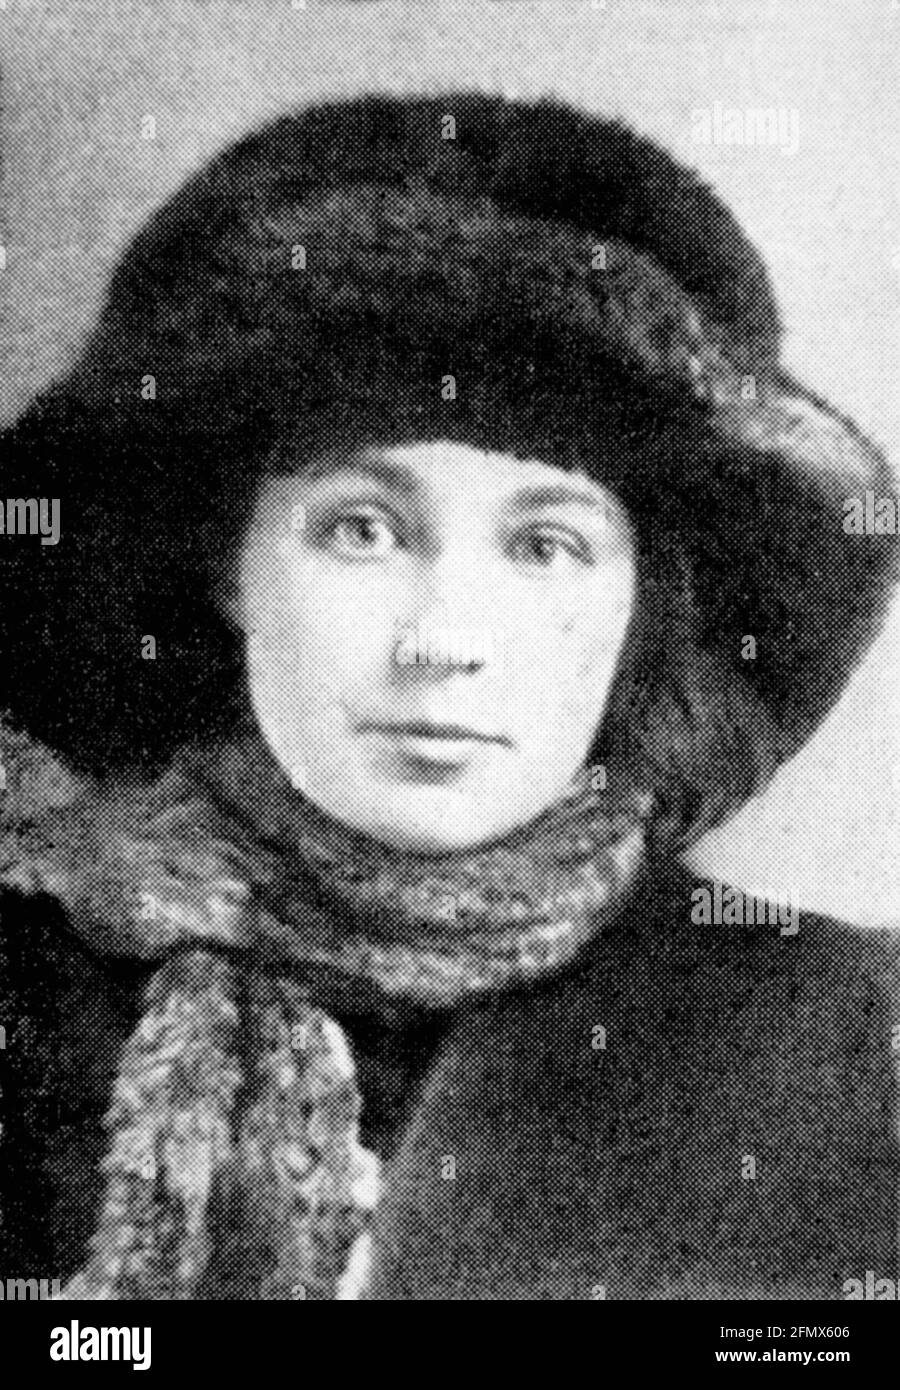 Tsvetaeva, Marina, 8.10.1892 - 31.8.1941, Russian author / writer, portrait, photo, 1912, ADDITIONAL-RIGHTS-CLEARANCE-INFO-NOT-AVAILABLE Stock Photo